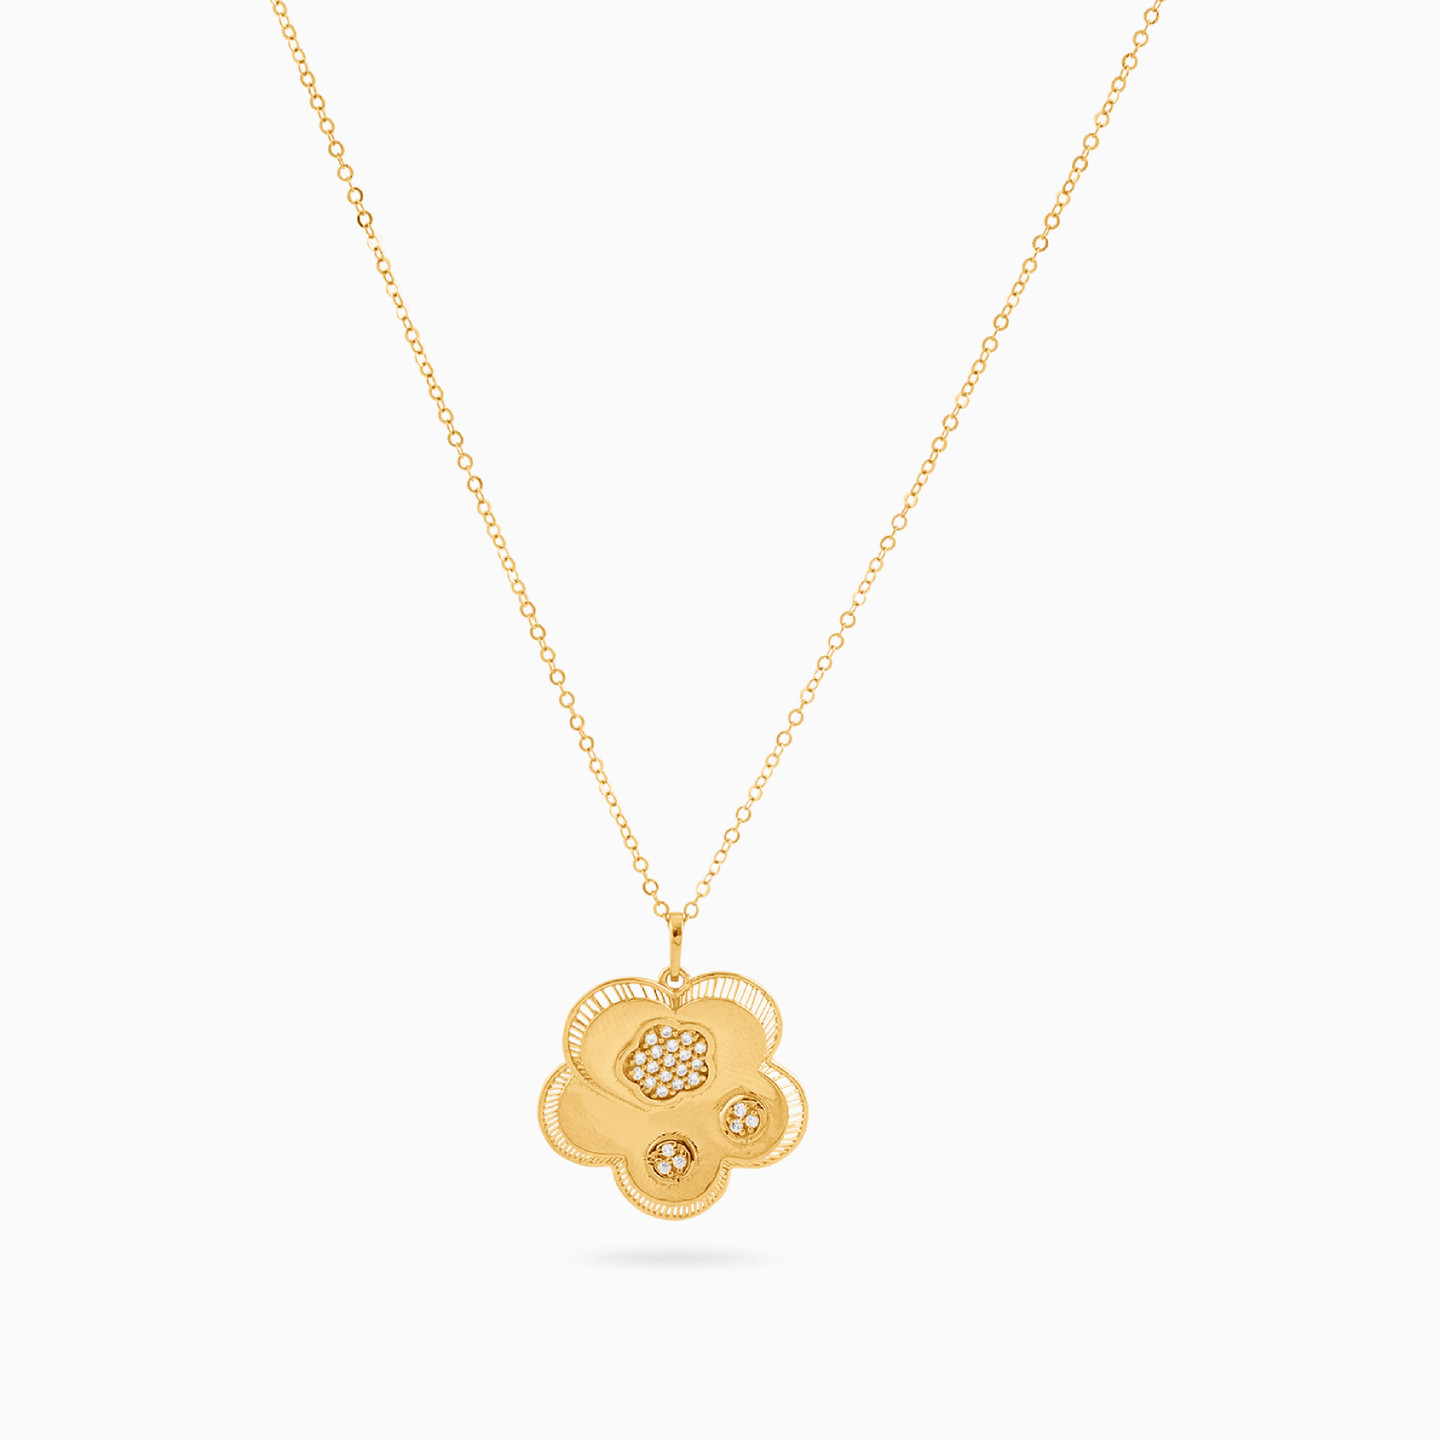 21K Gold Cubic Zirconia Pendant Necklace - 3